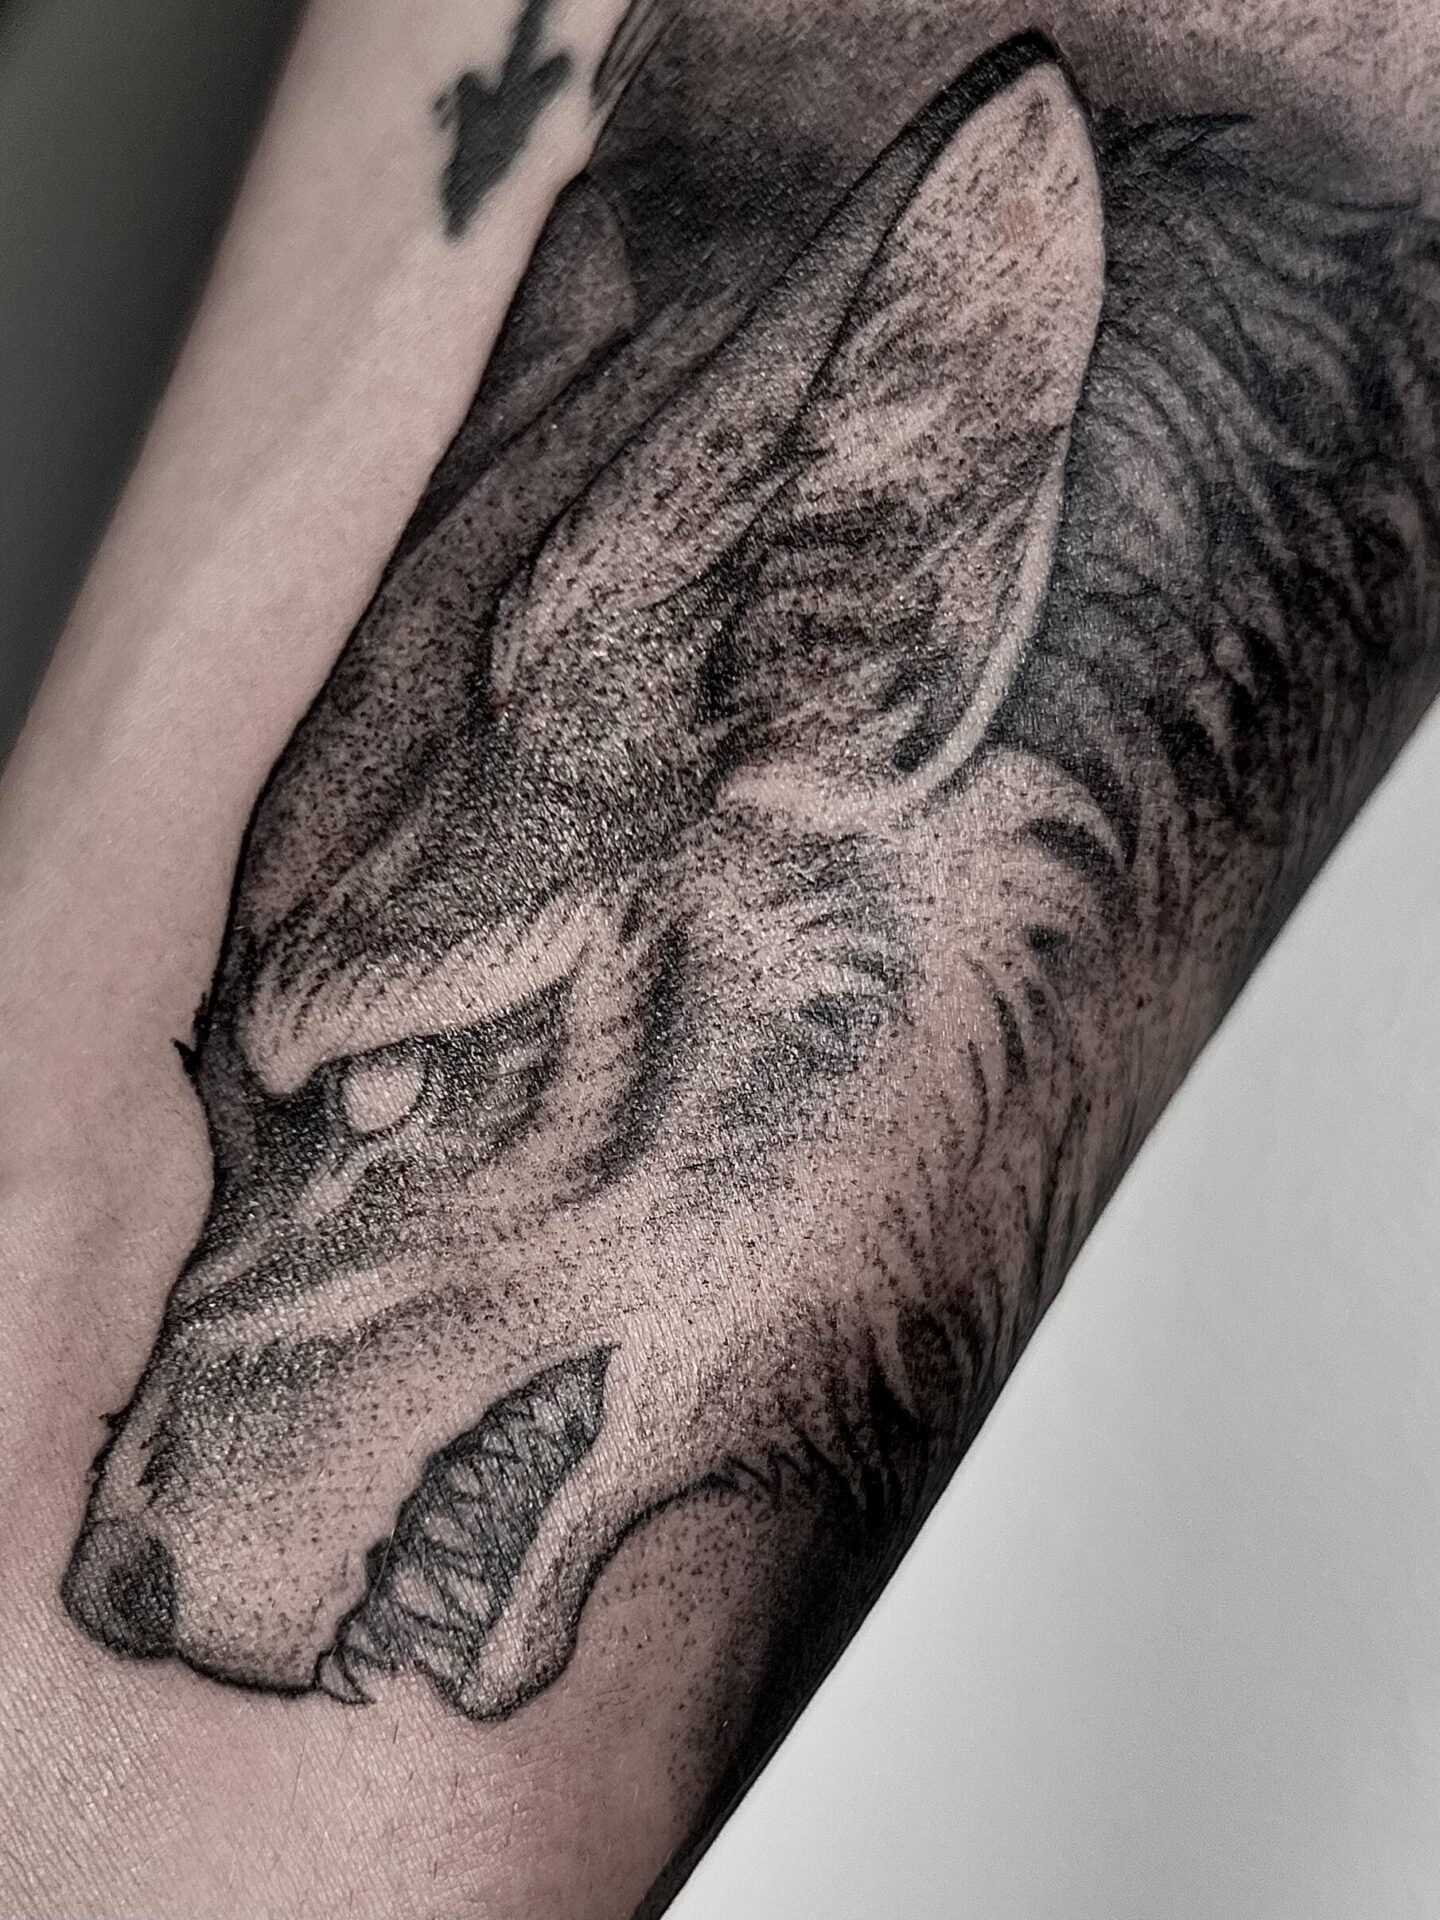 tatuaż wilk